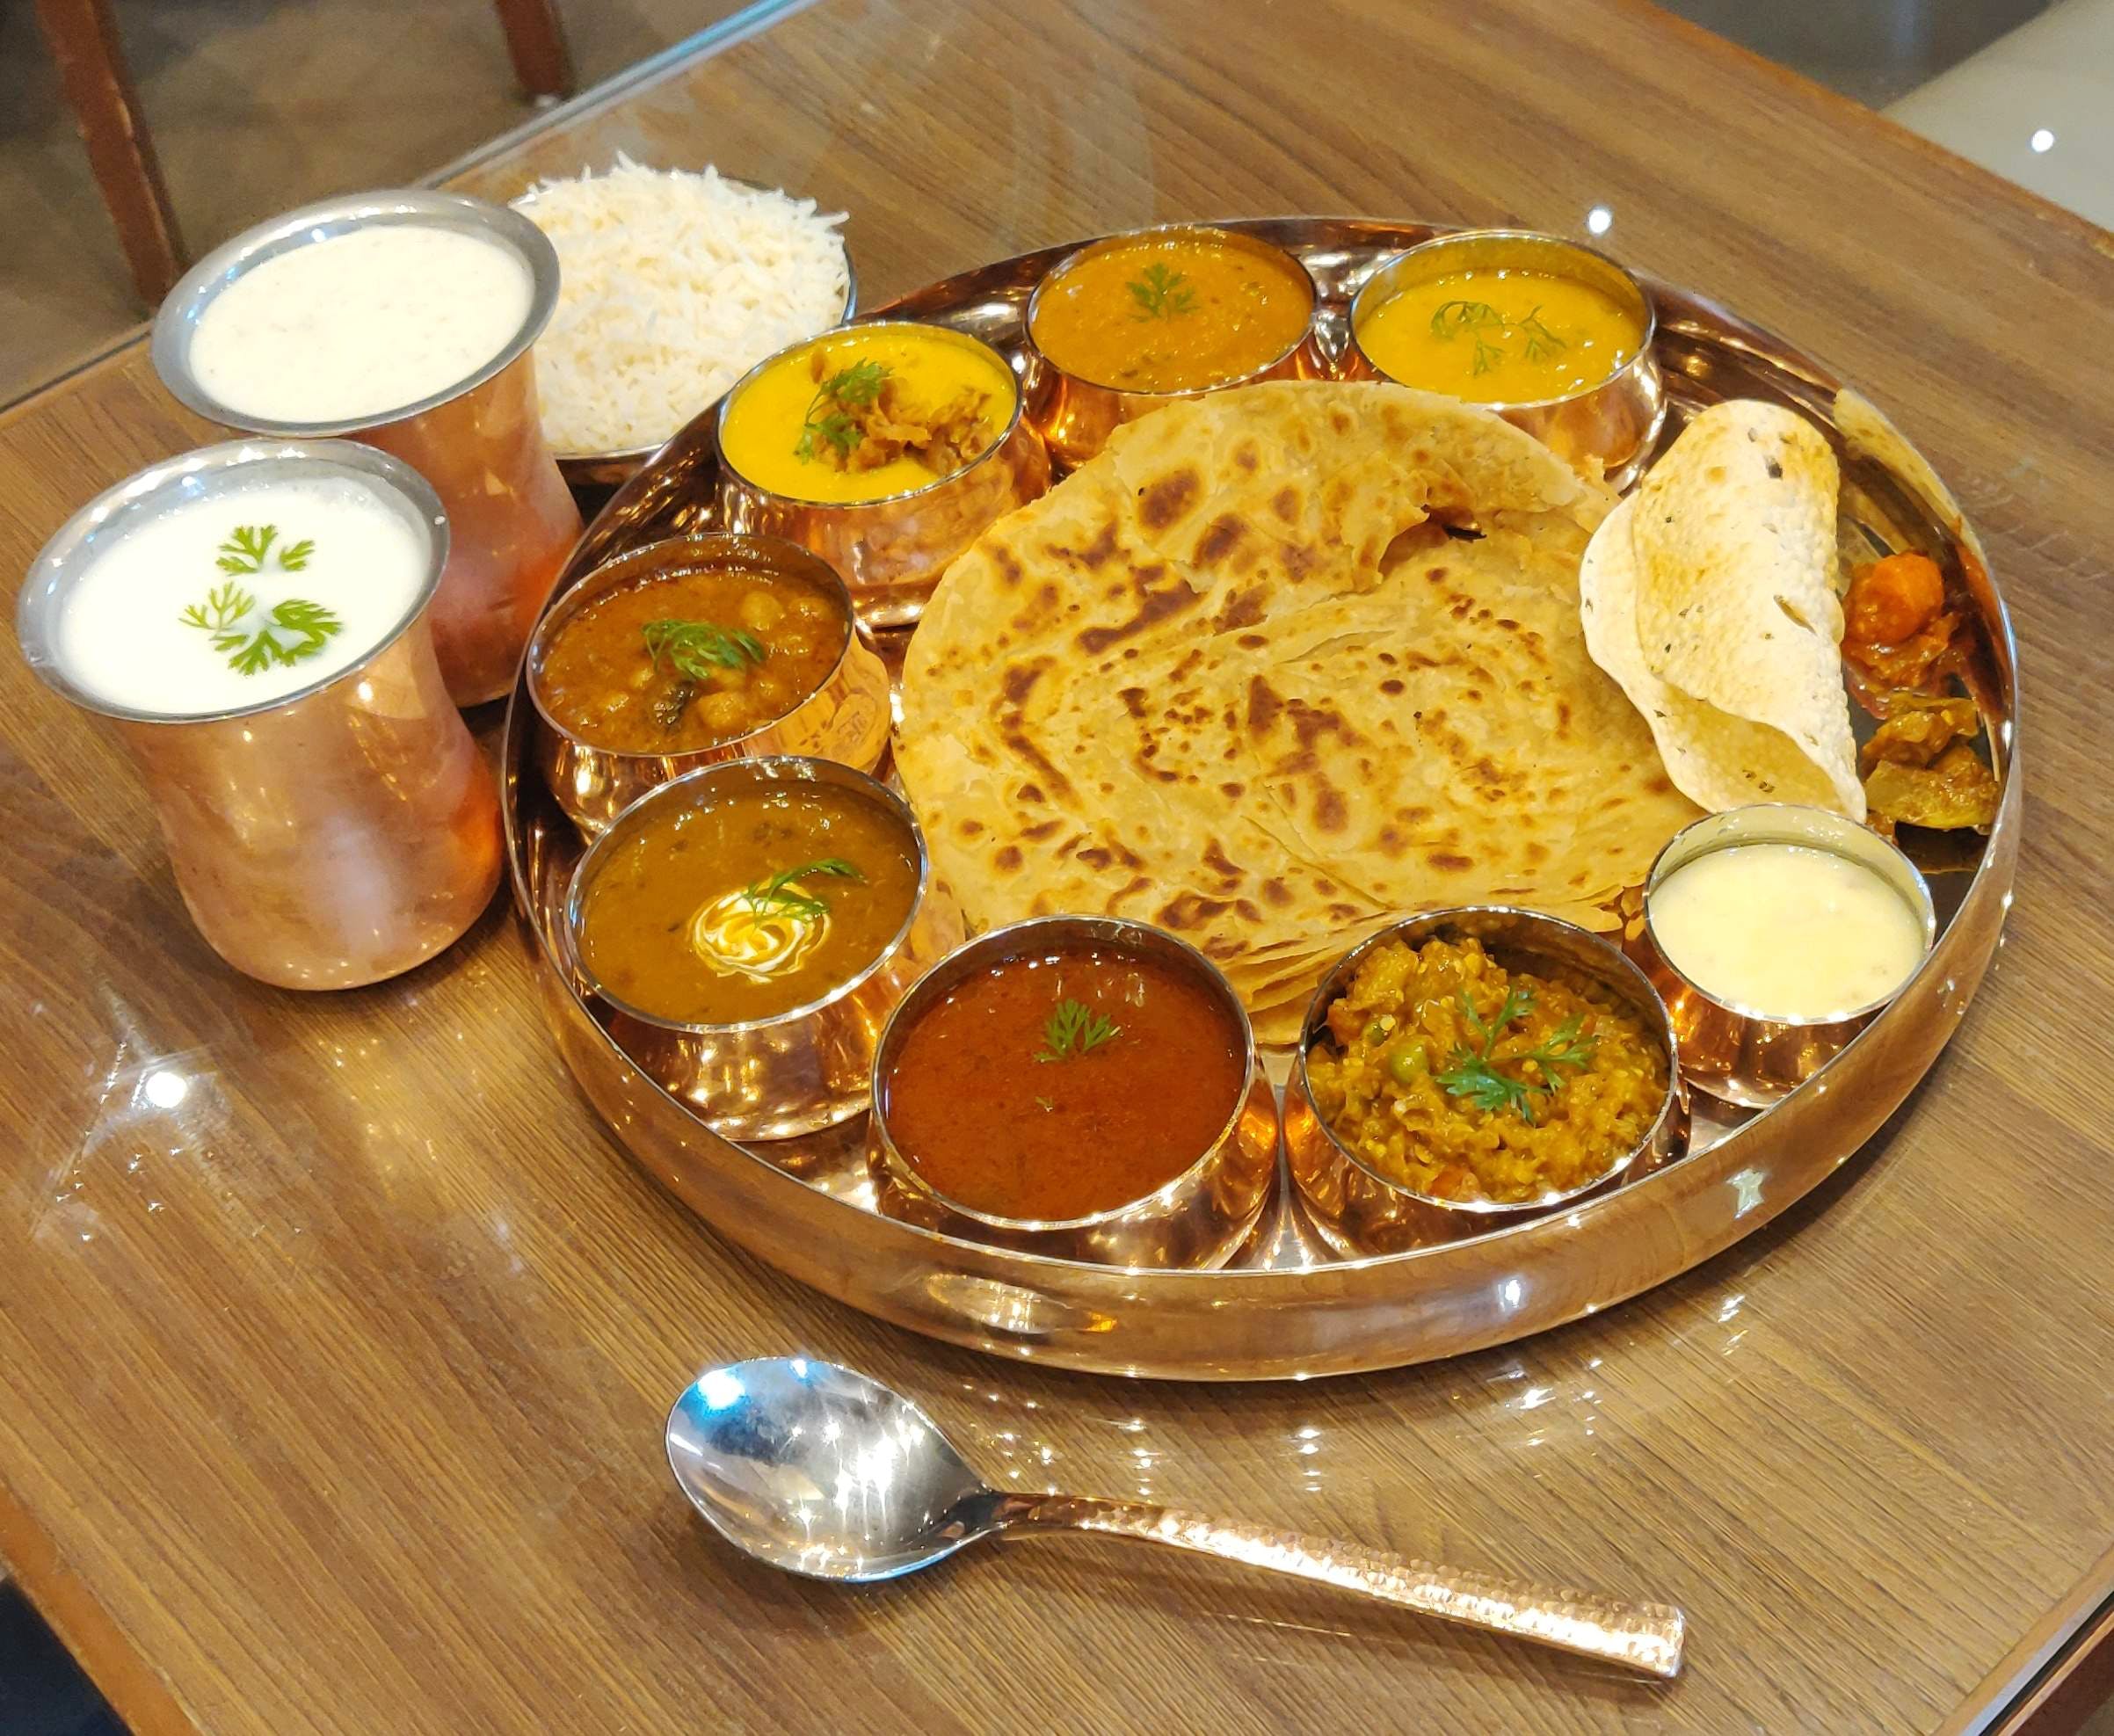 Dish,Food,Cuisine,Meal,Ingredient,Curry,Naan,Punjabi cuisine,Indian cuisine,Breakfast